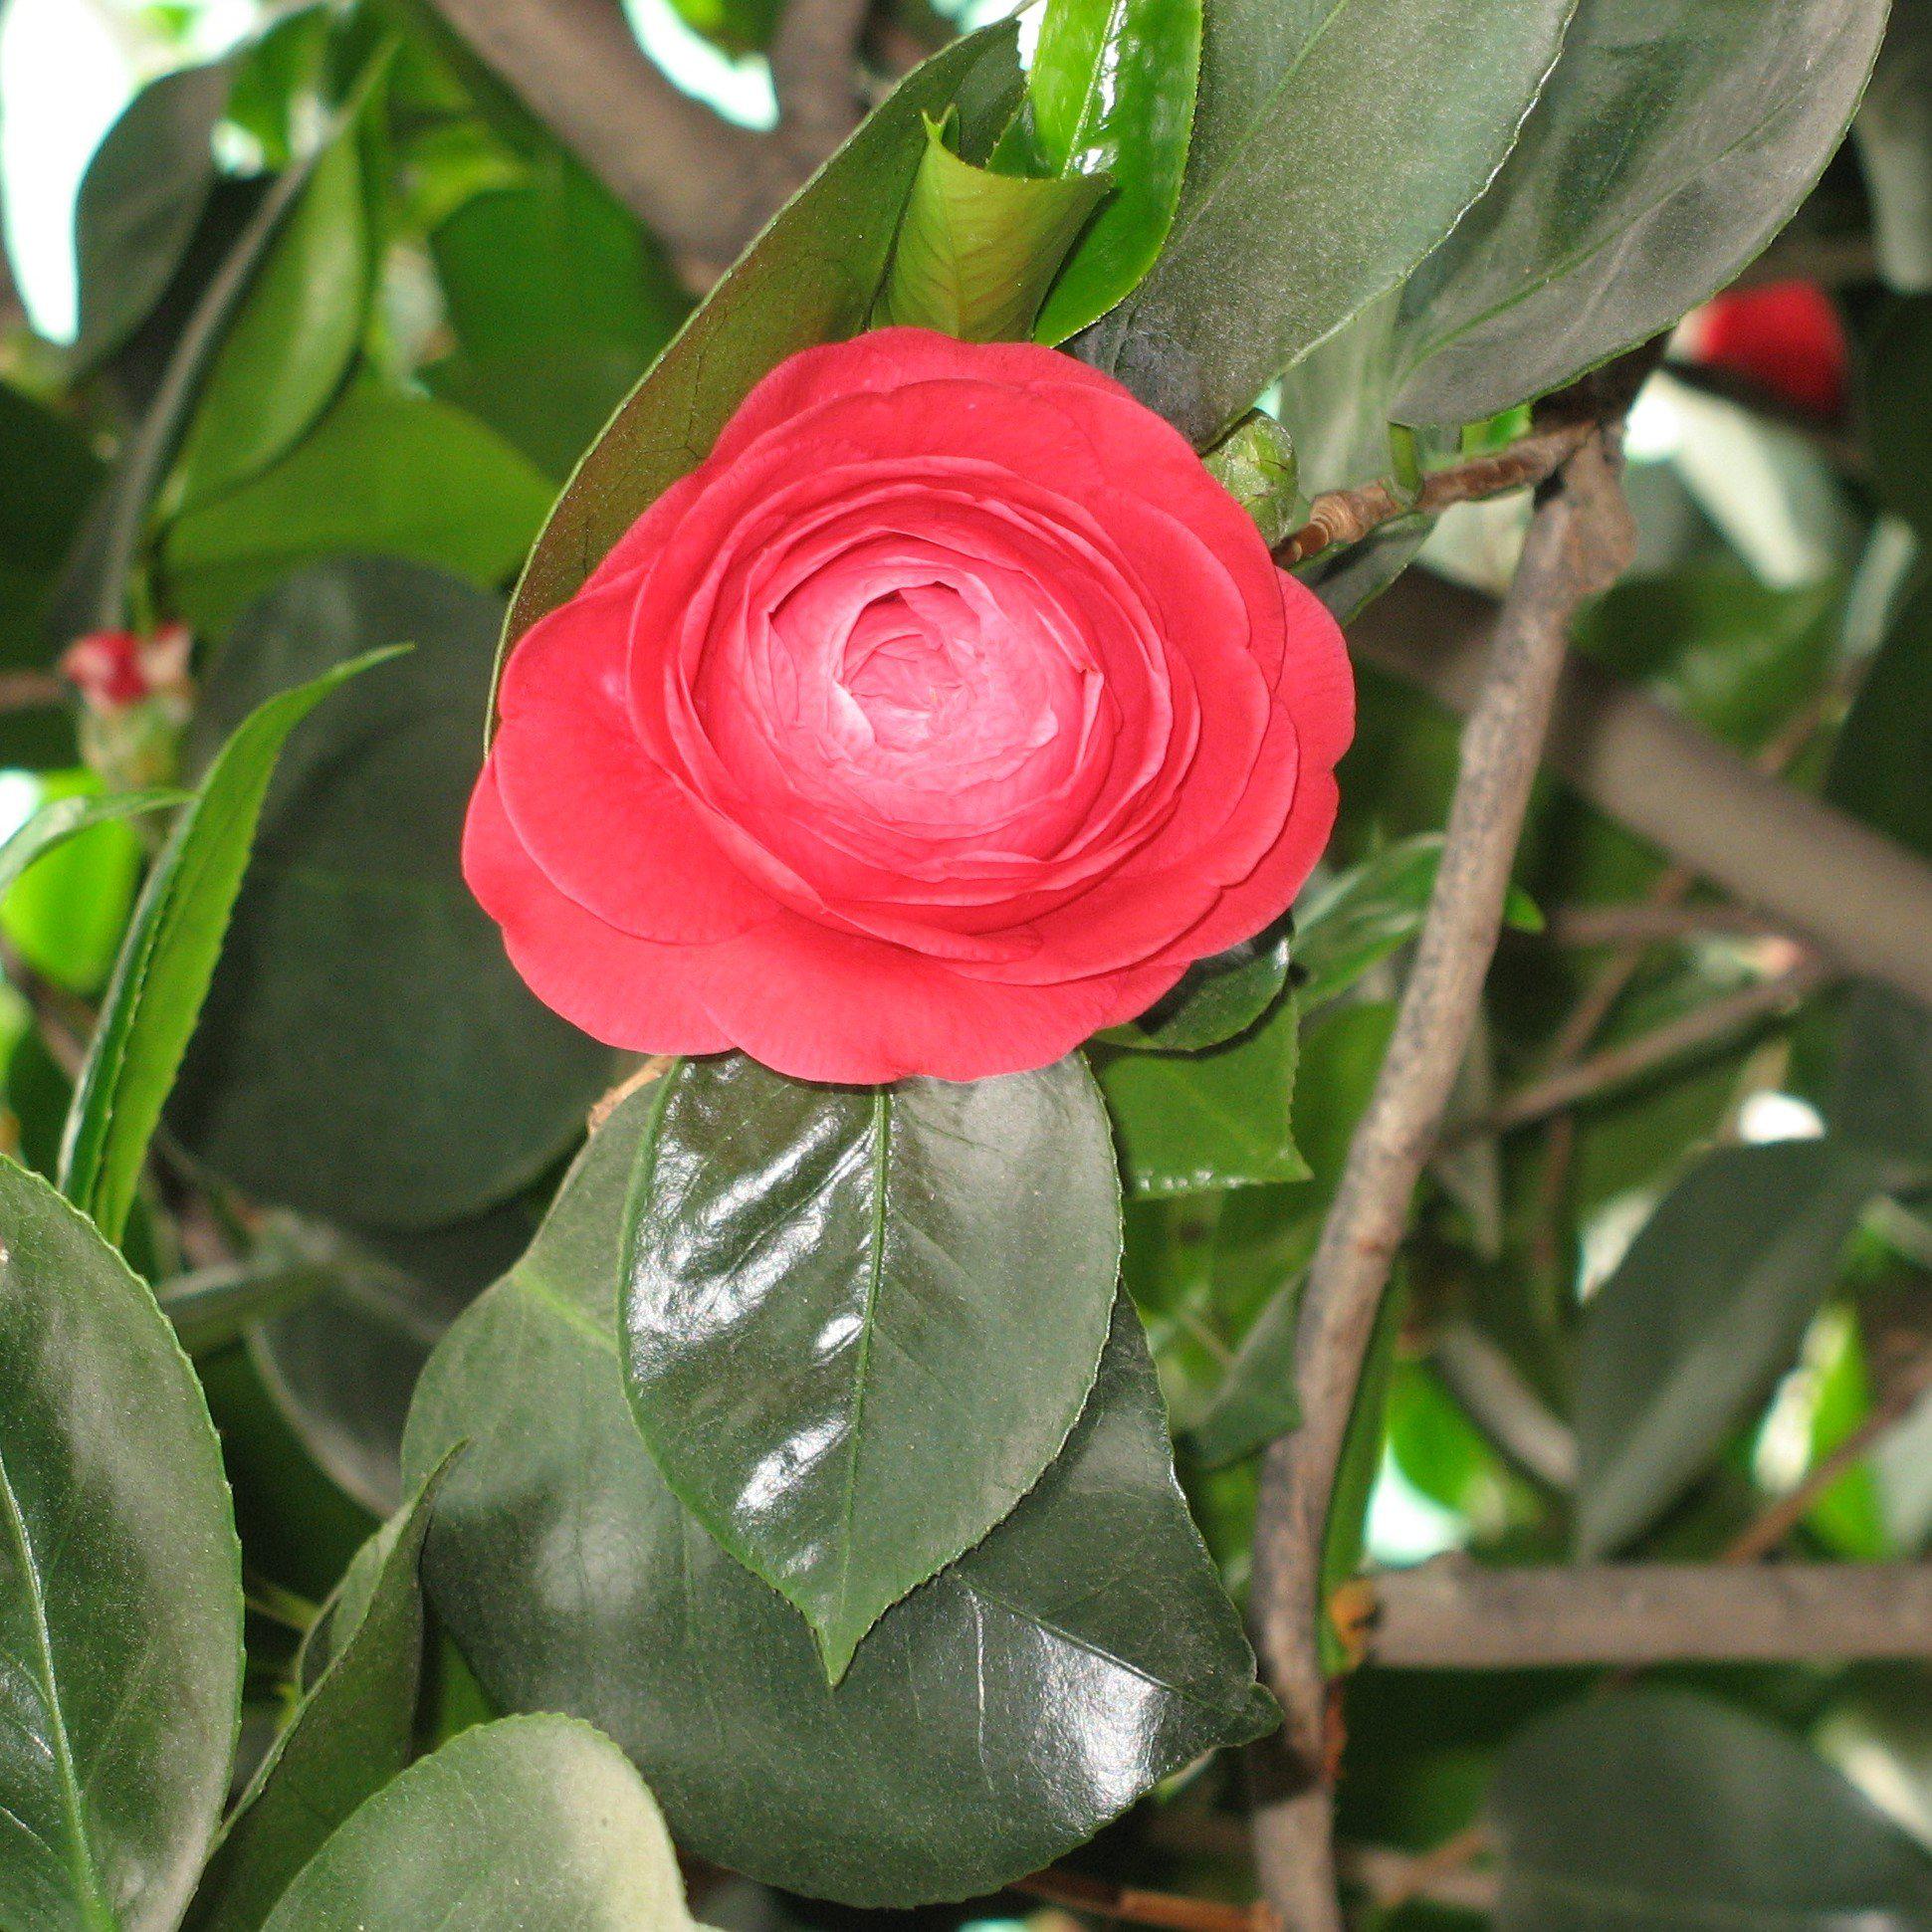 Camellia japonica 'Mathotiana' ~ Monrovia® Mathotiana Camellia